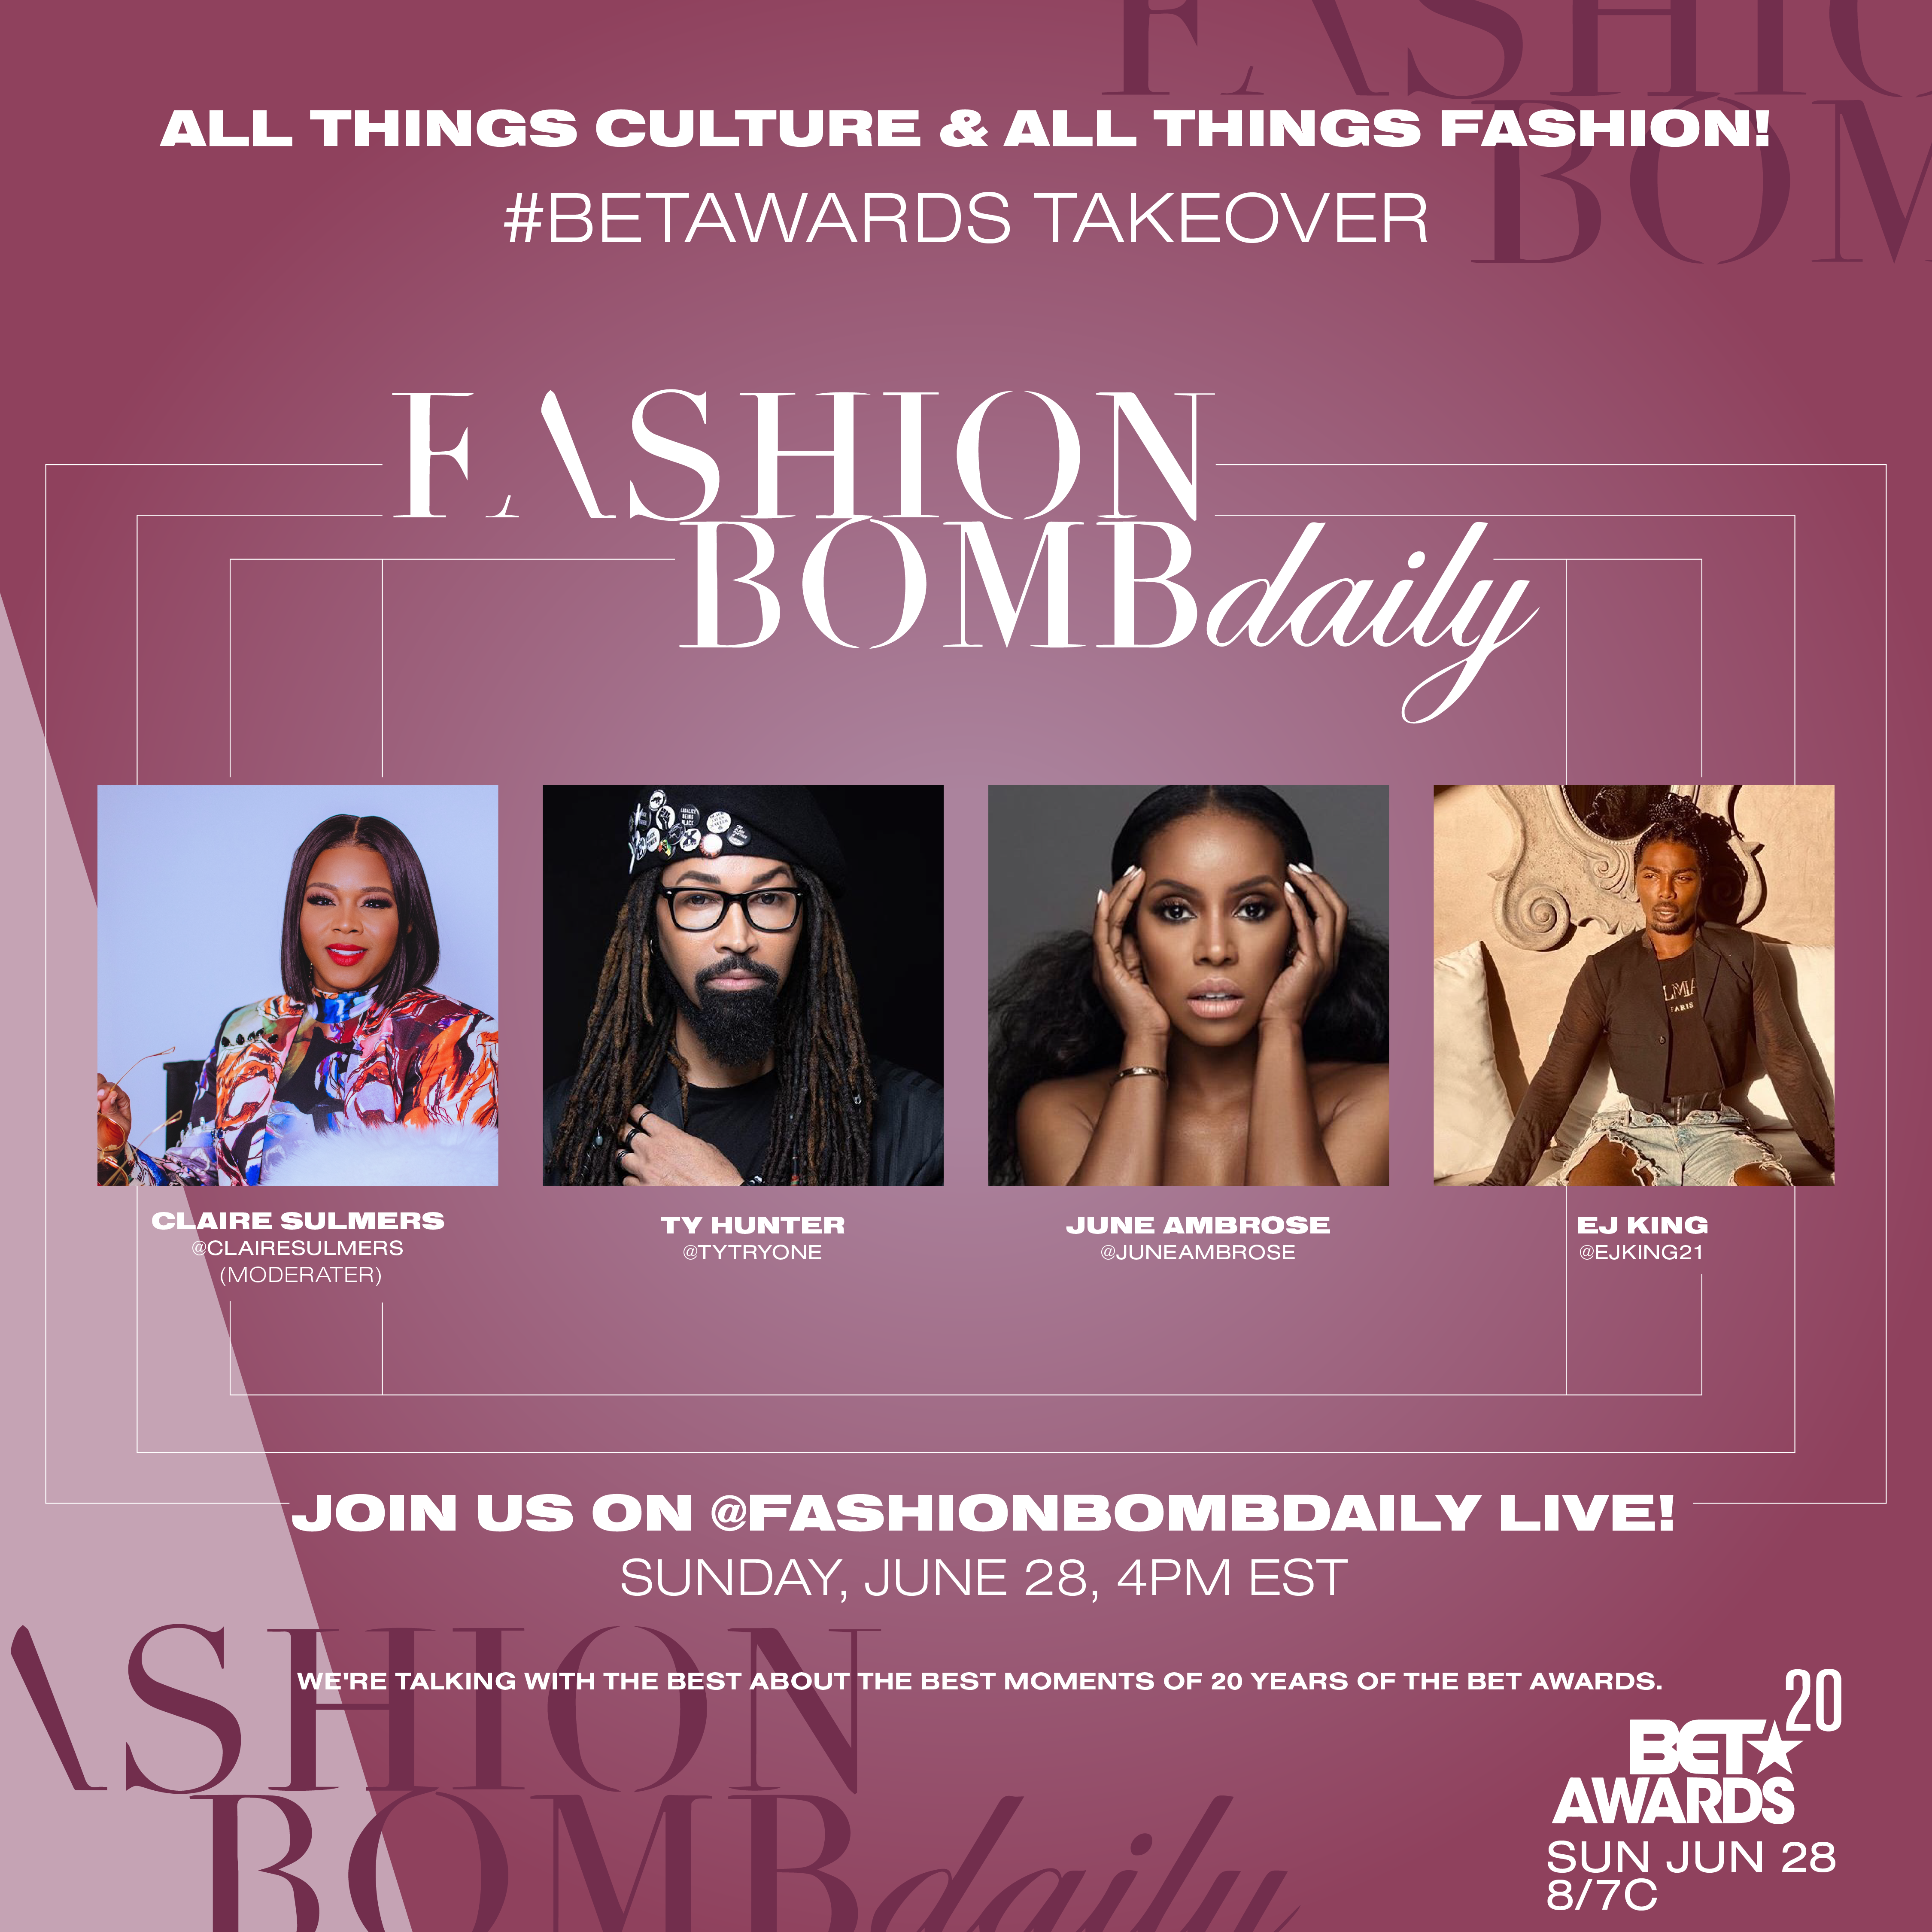 NYFW: LeBron James Joins Harlem's Fashion Row To Celebrate 11 Years Of  Black Style